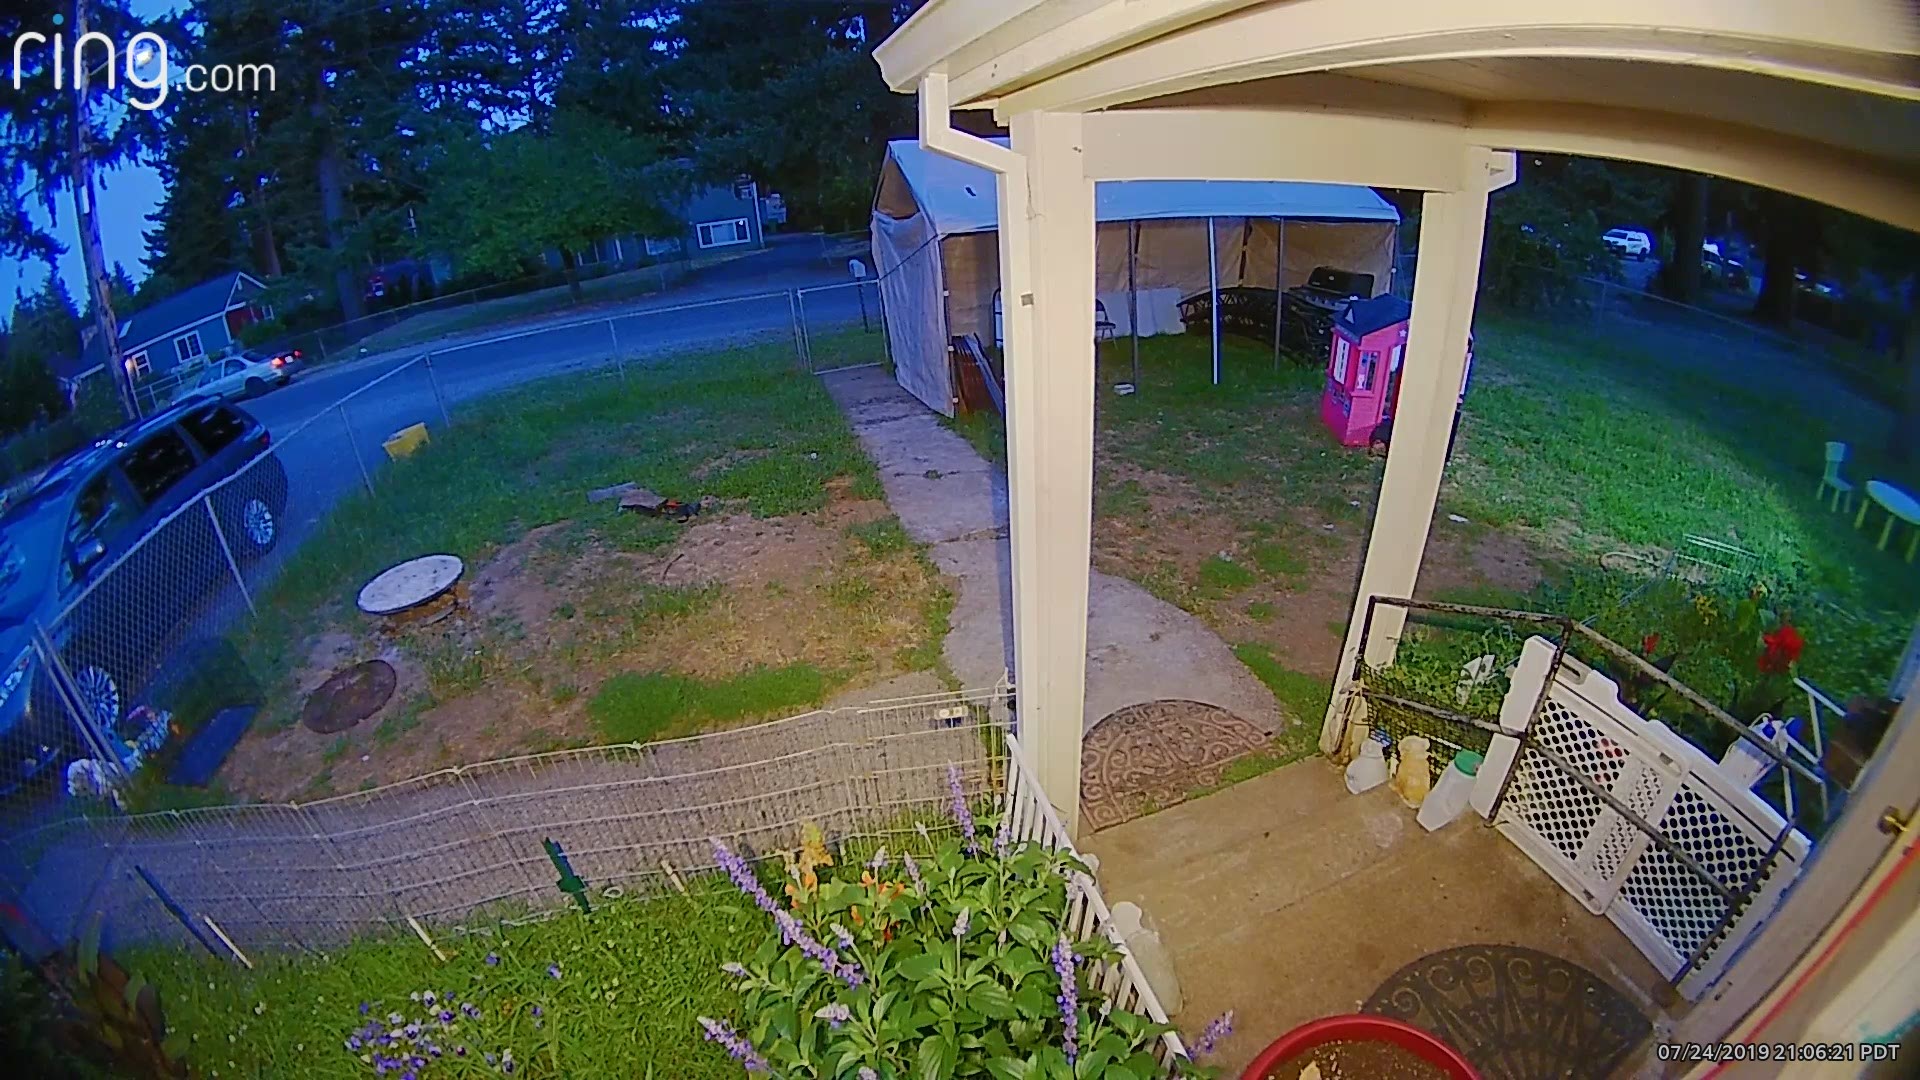 Surveillance video shows a man stealing a dog from a SE Portland fenced yard.